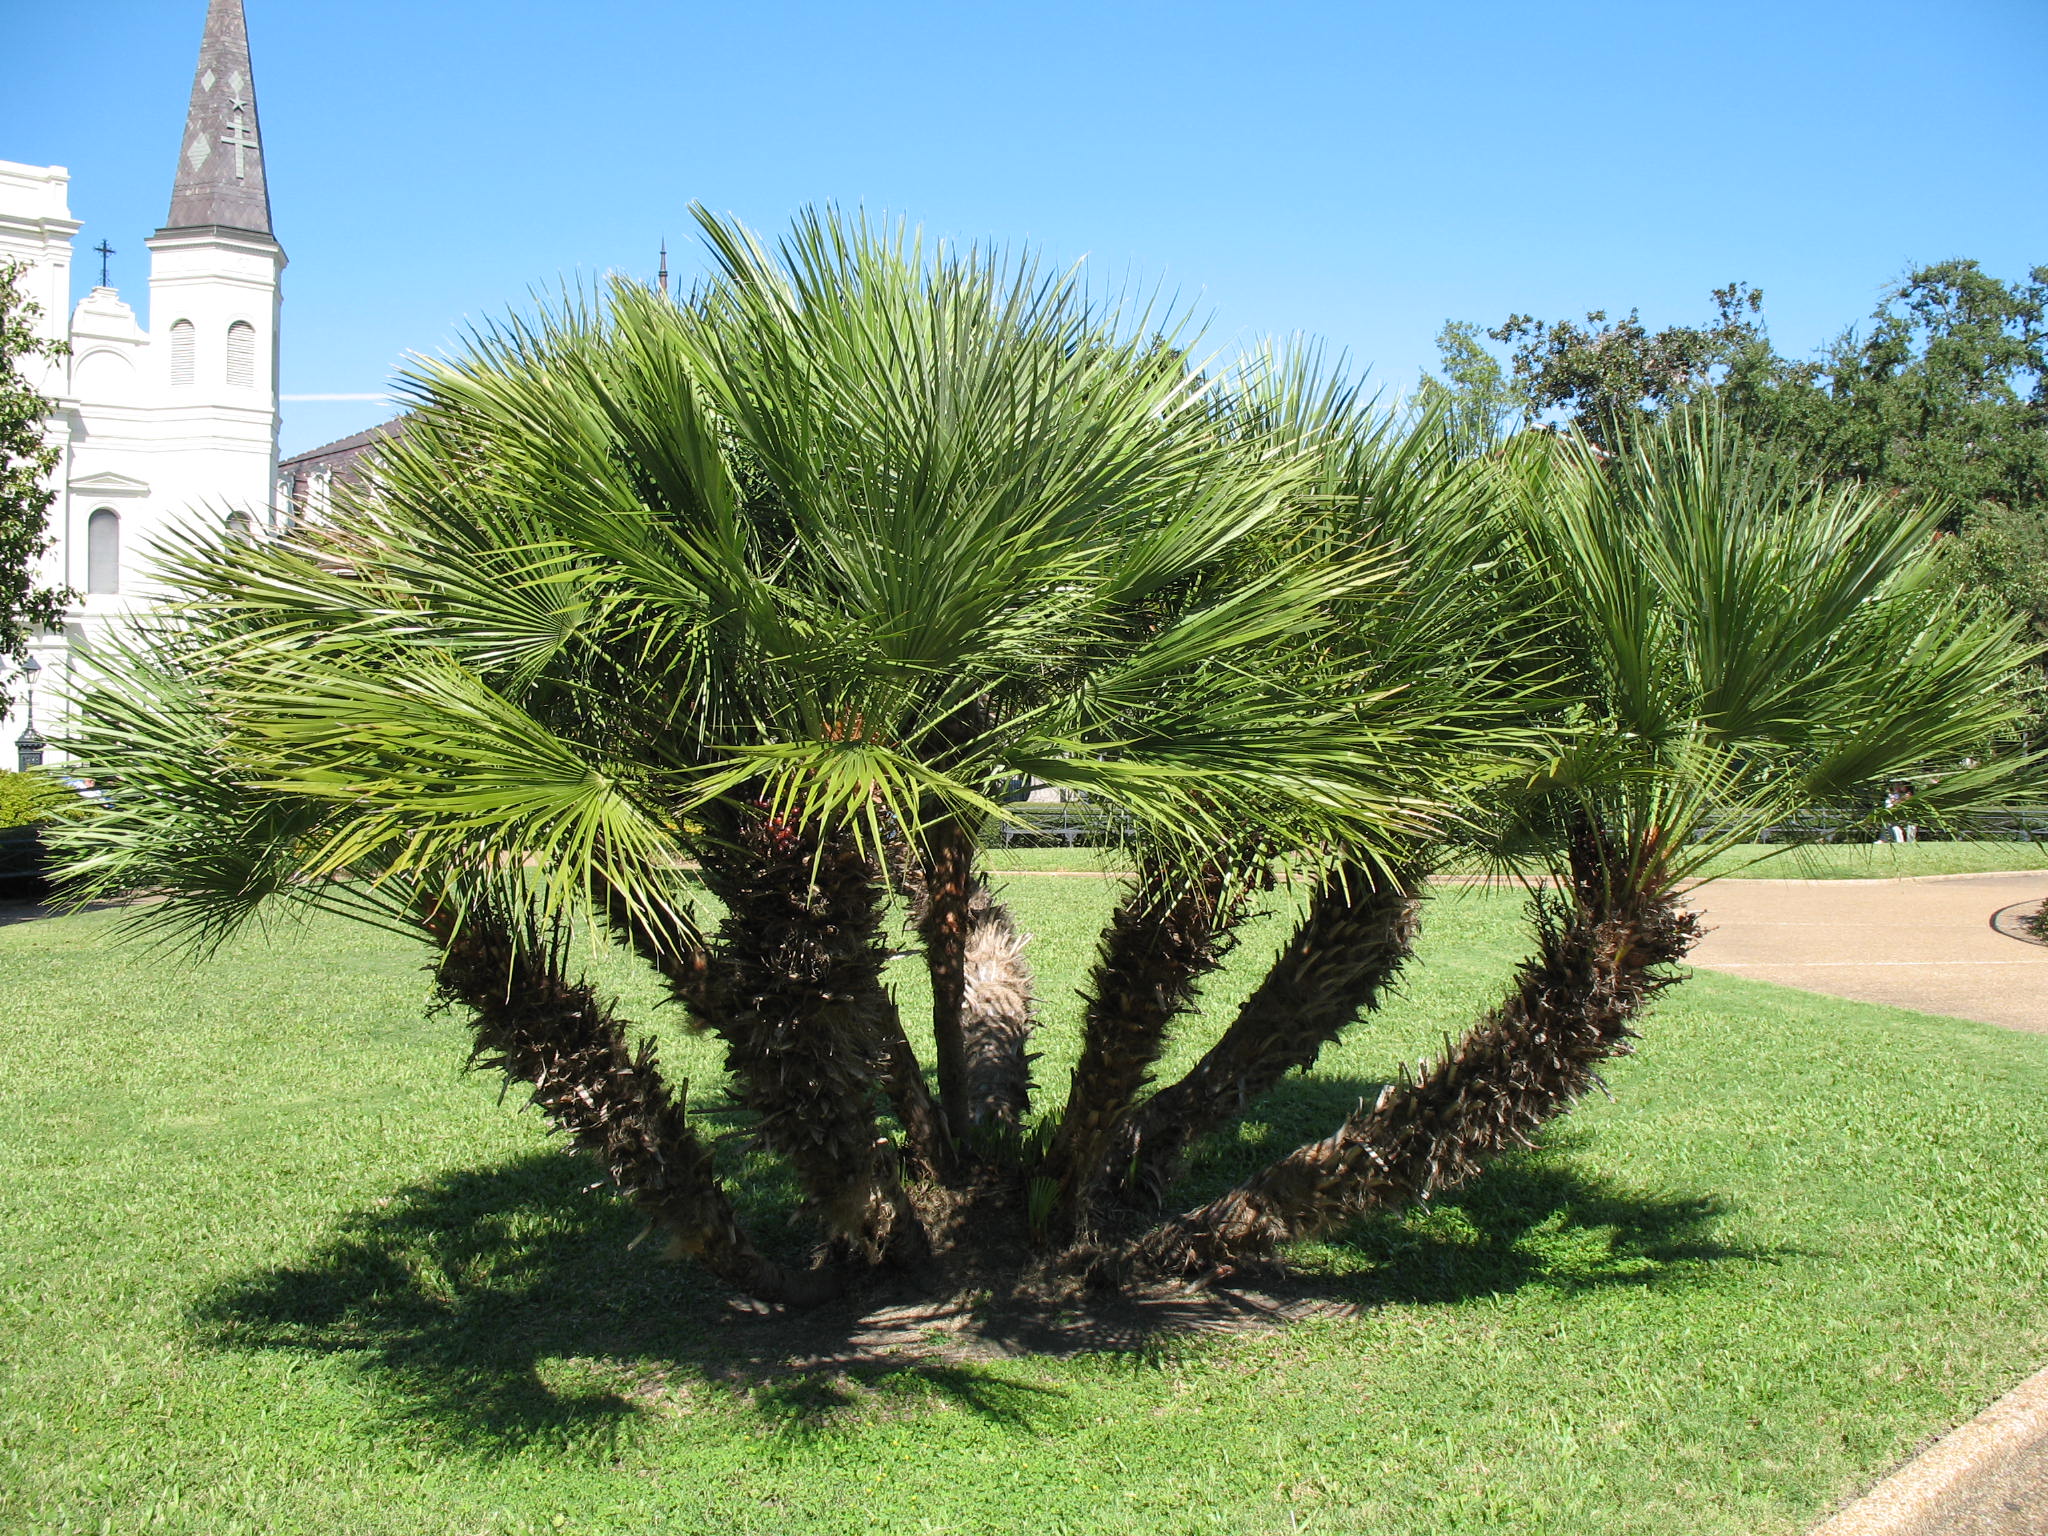 Chamaerops humilis / Mediterranean Fan Palm